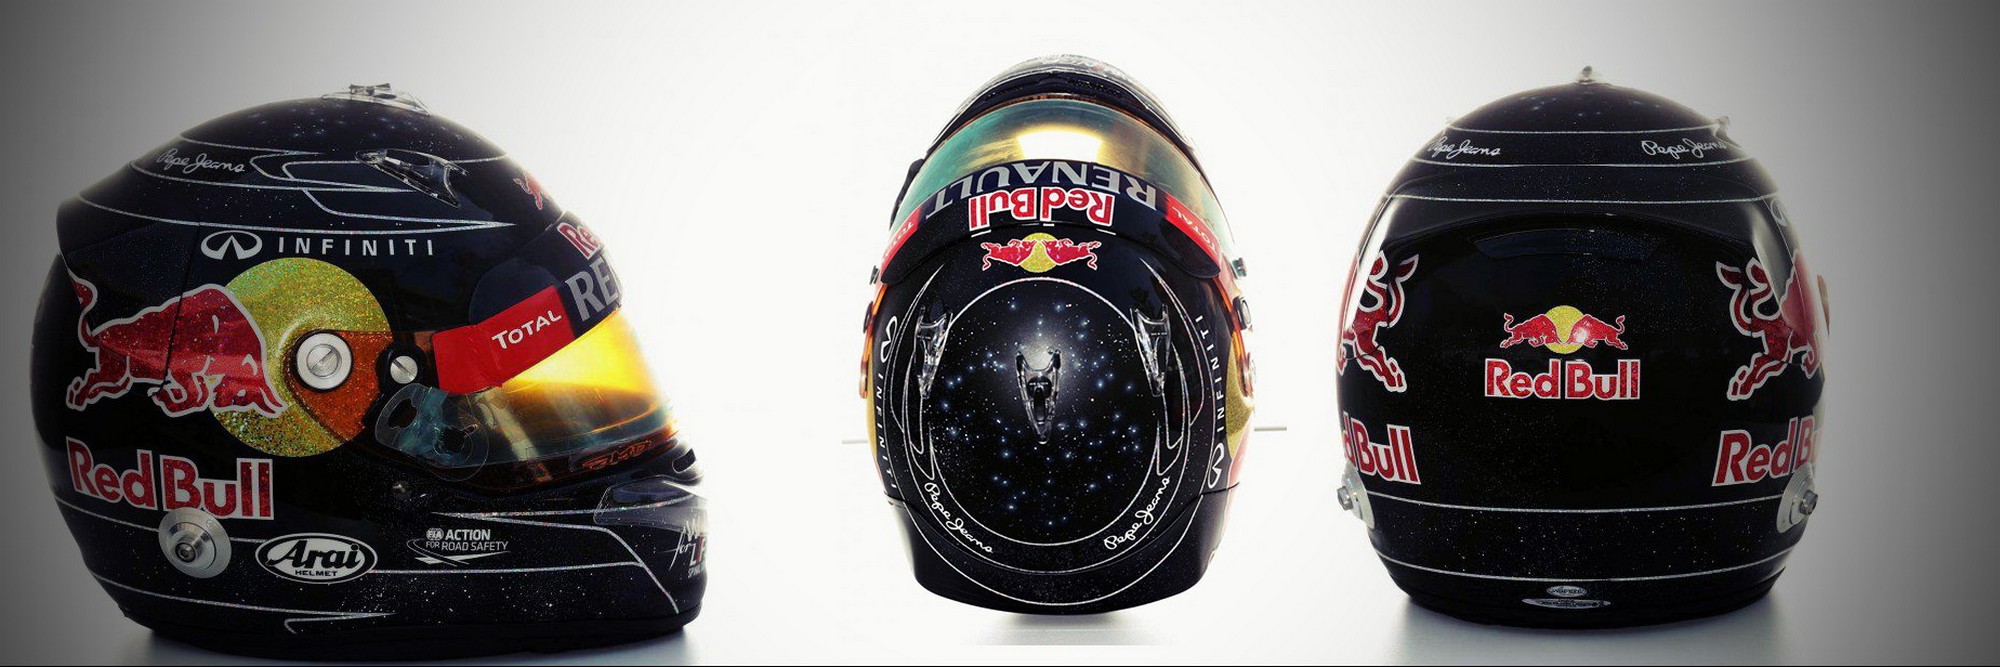 Шлем Себастьяна Феттеля на Гран-При Сингапура 2012 | 2012 Singapore Grand Prix helmet of Sebastian Vettel